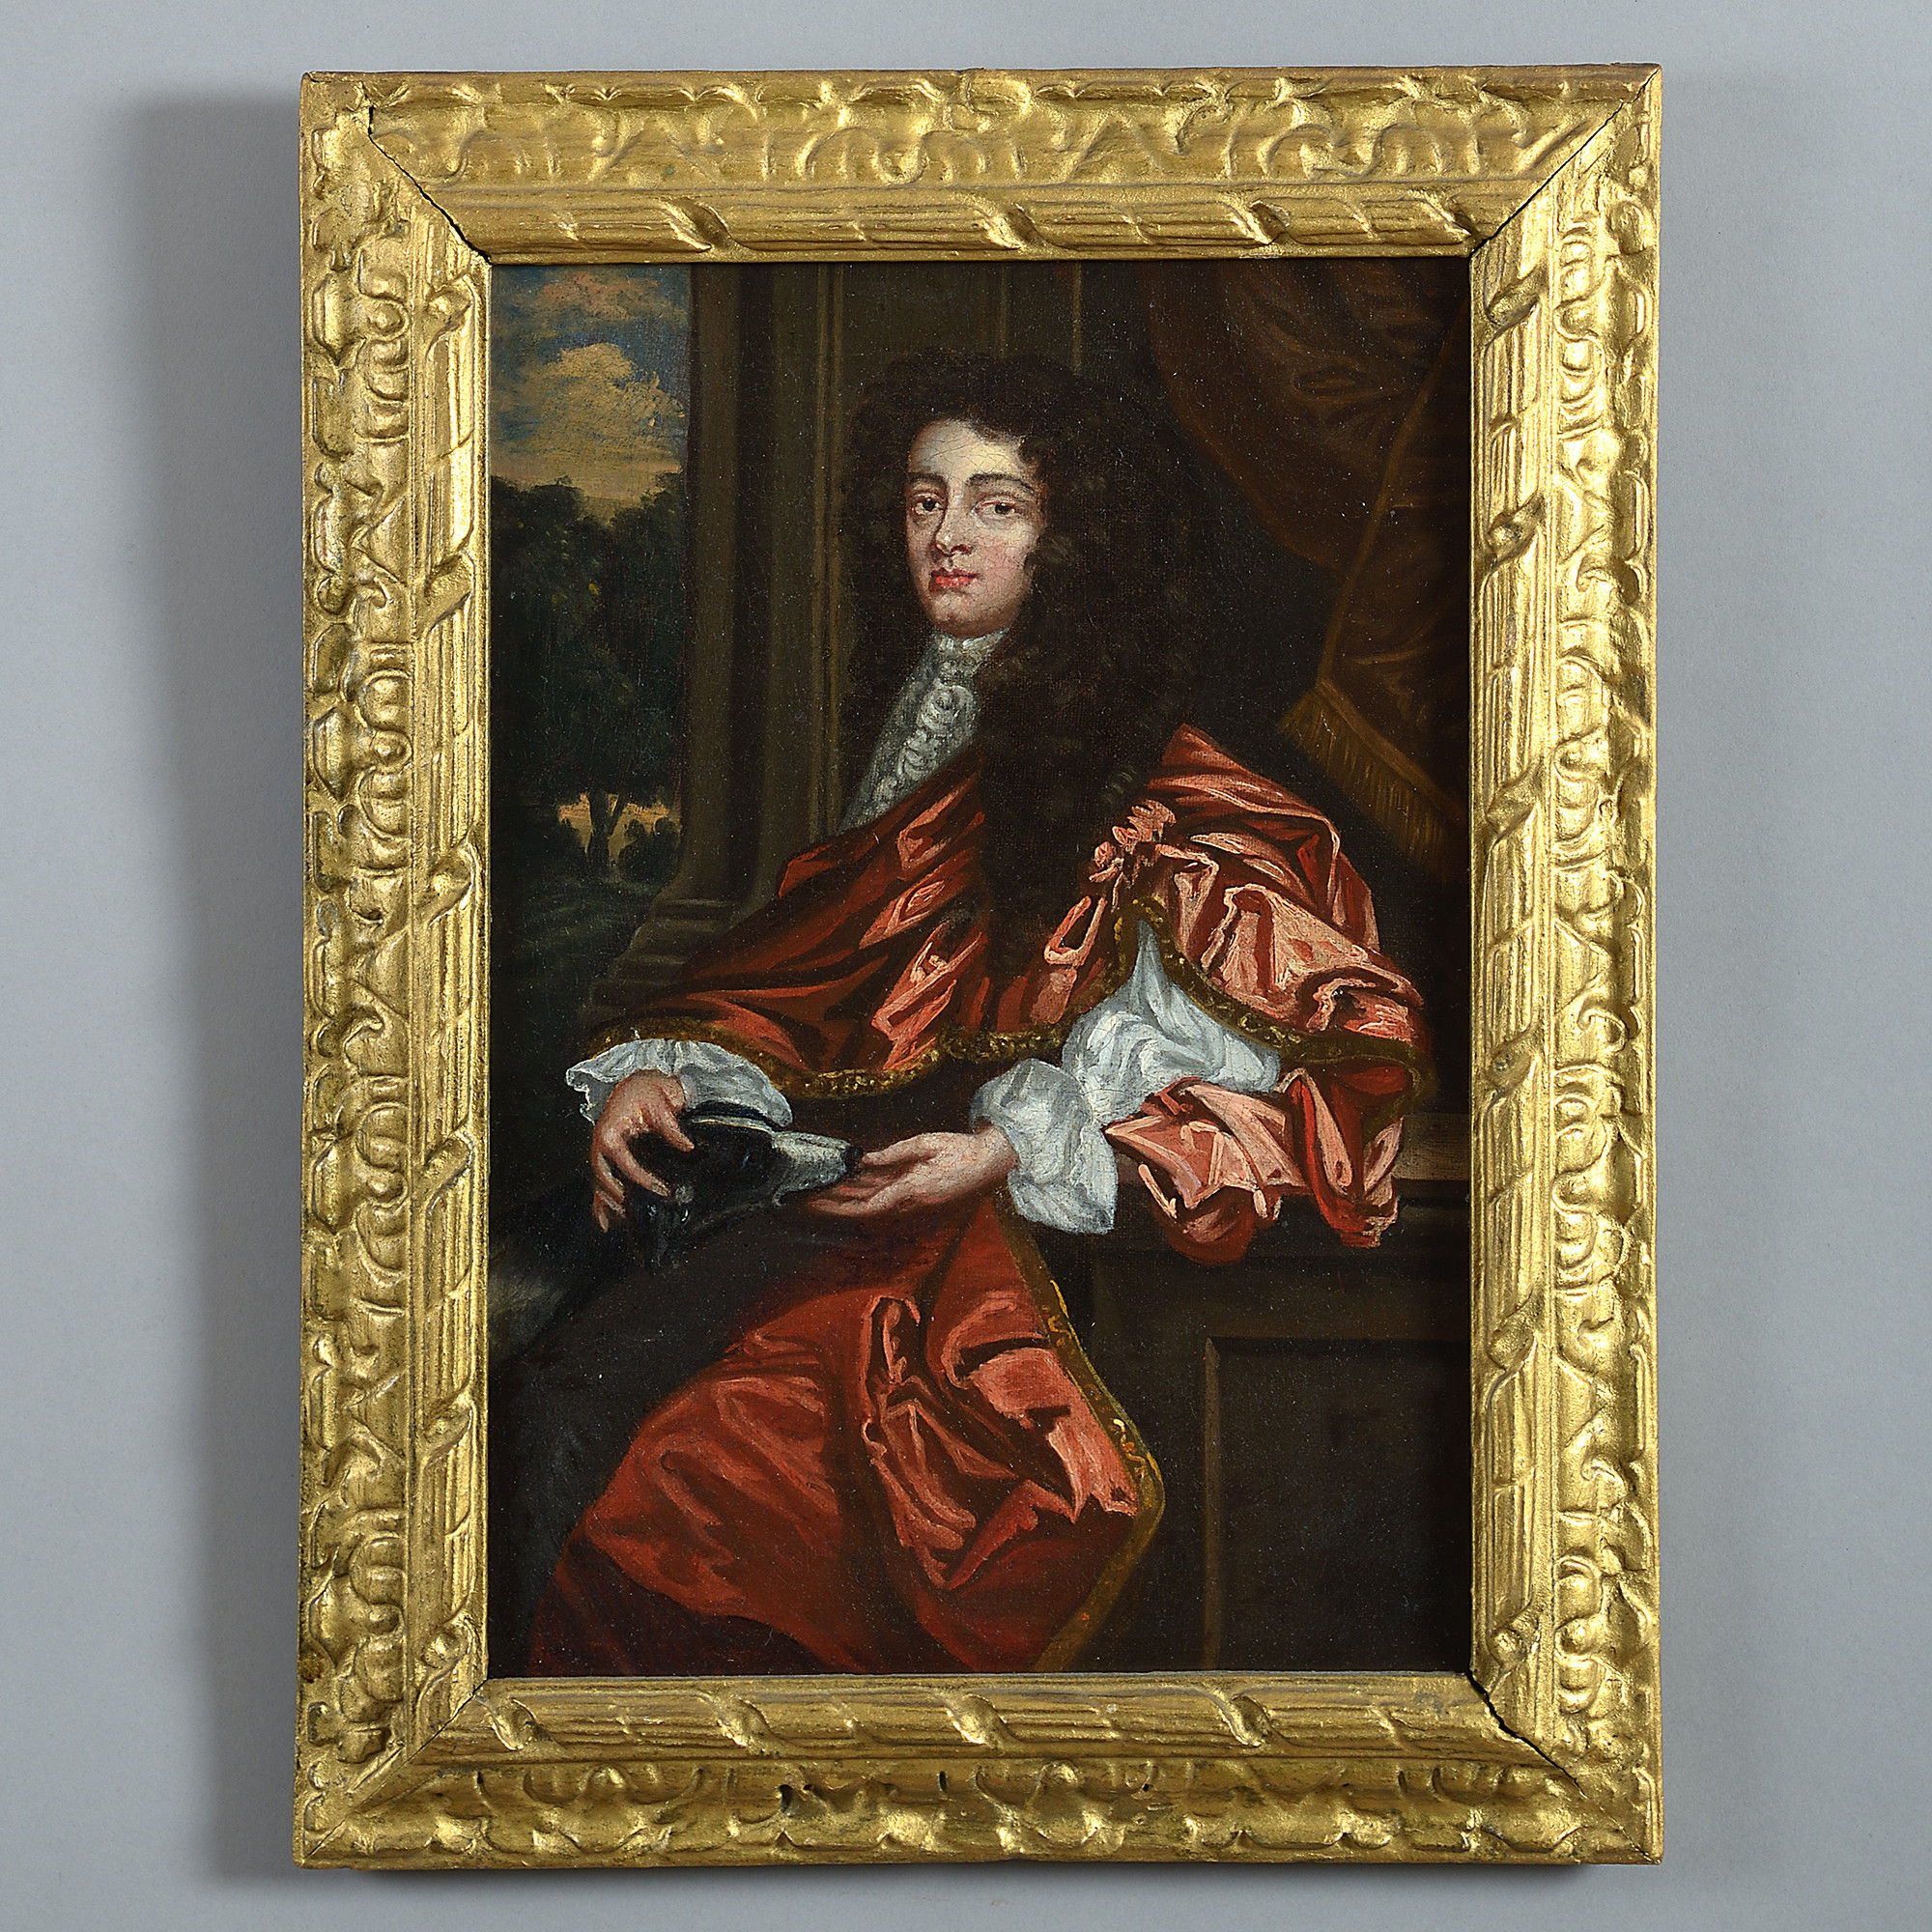 Manner of godfrey kneller - a 17th century portrait of a gentleman